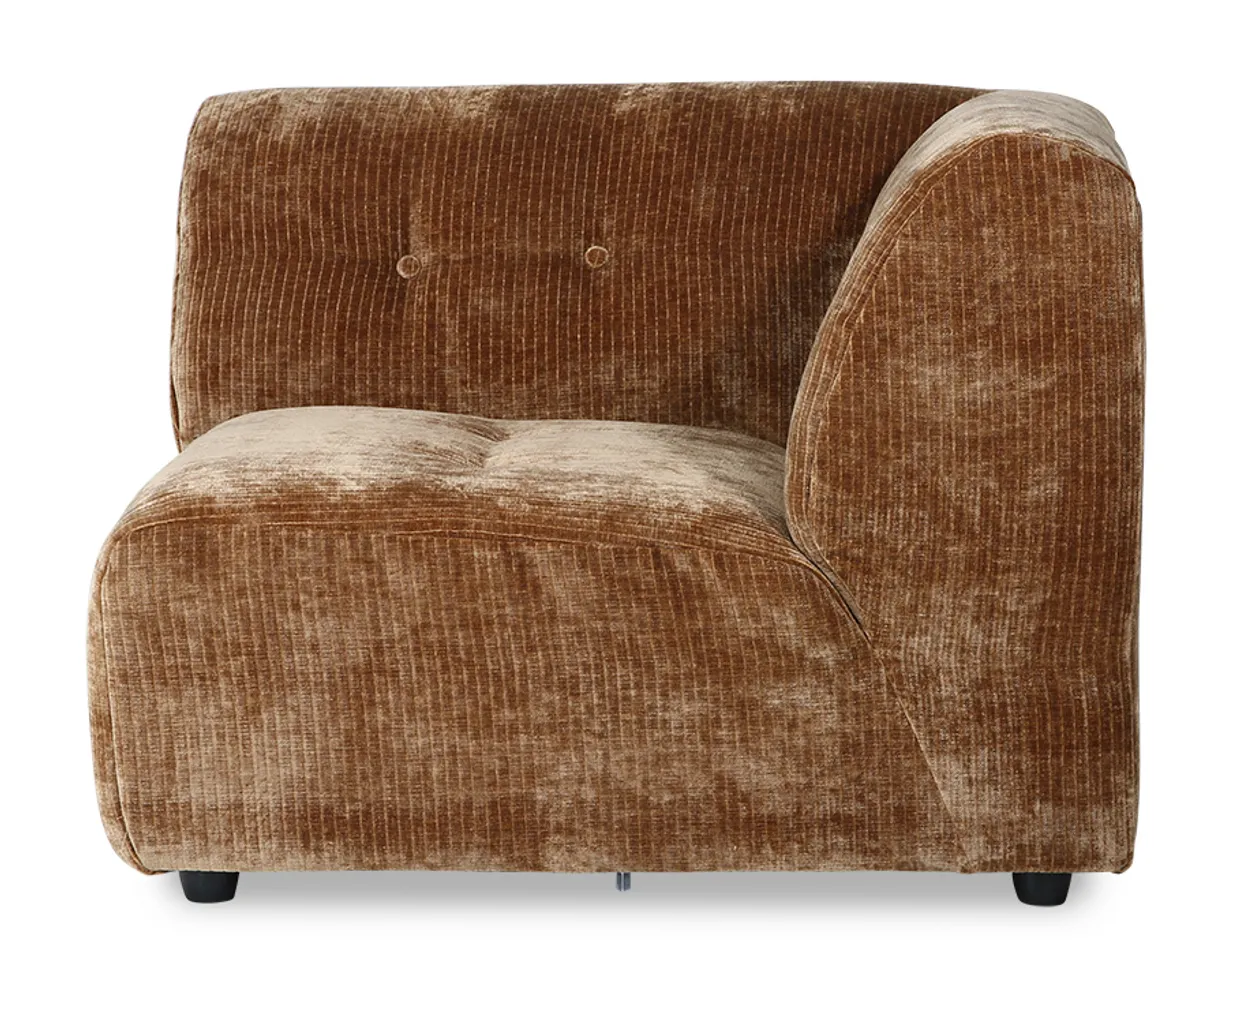 Vint couch: element left, corduroy velvet, aged gold